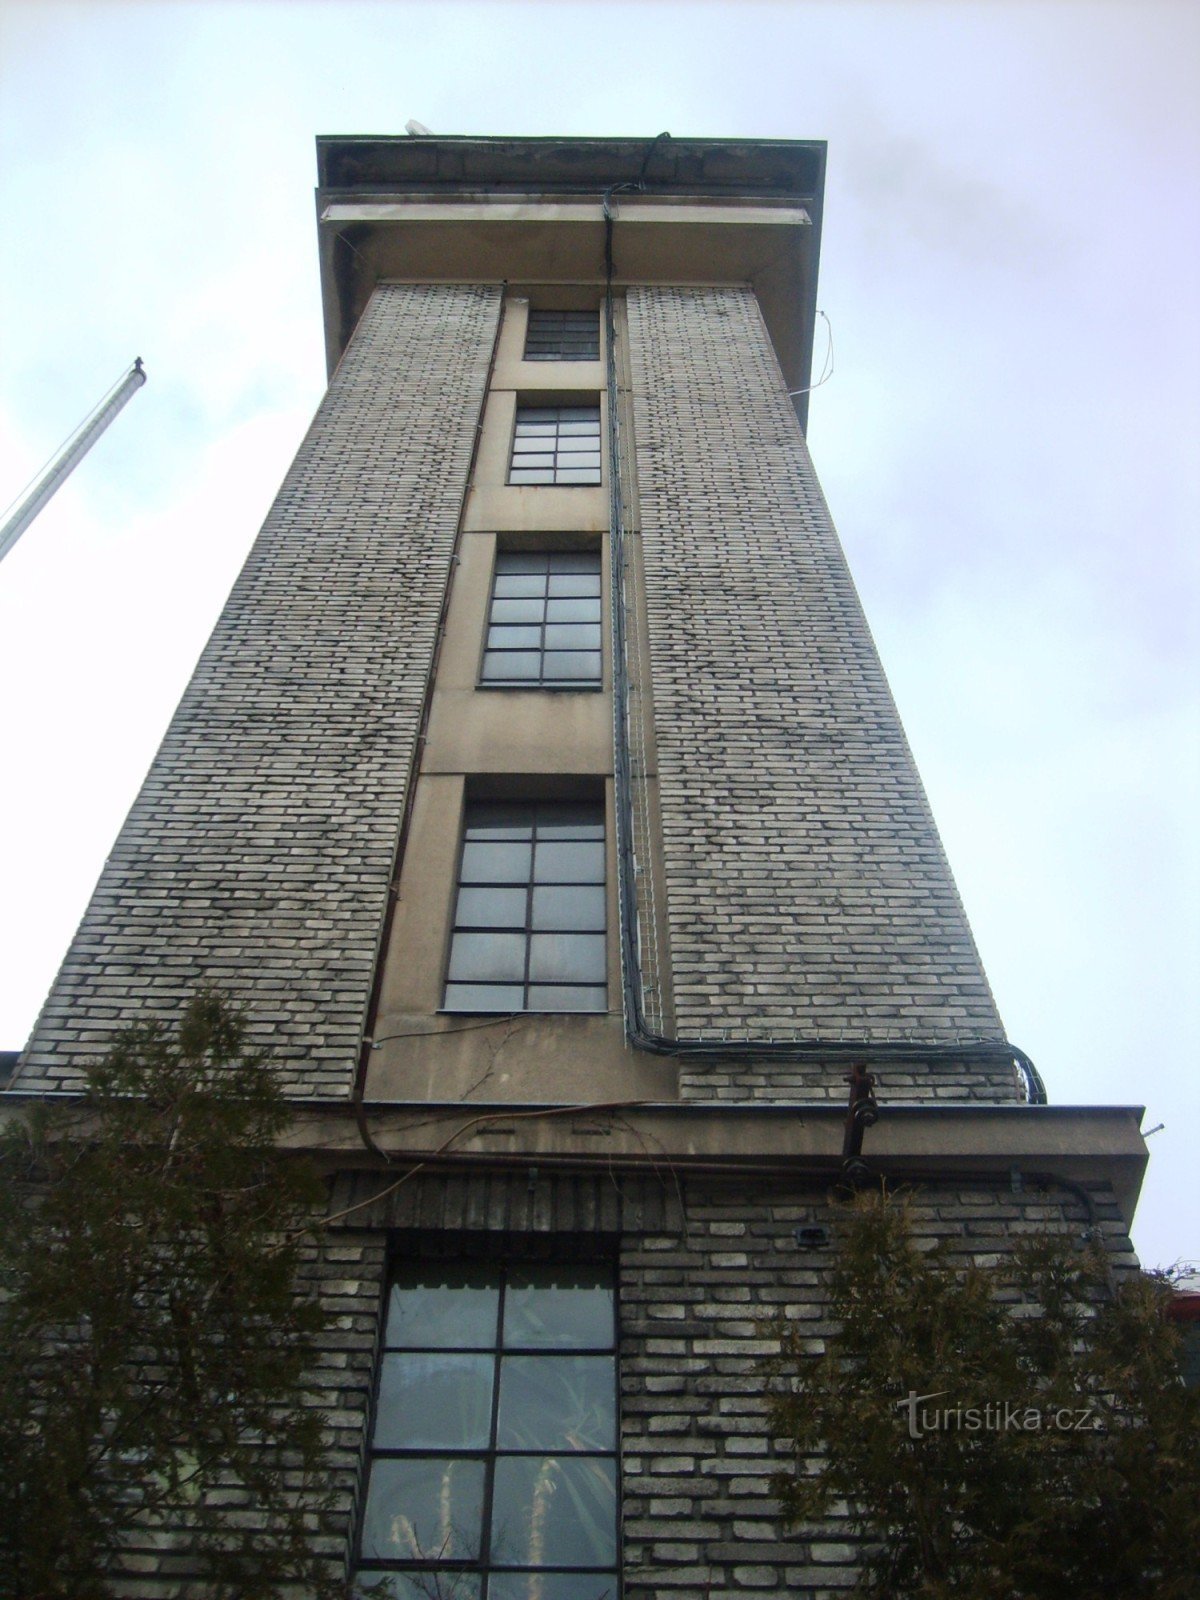 razgledni stolp